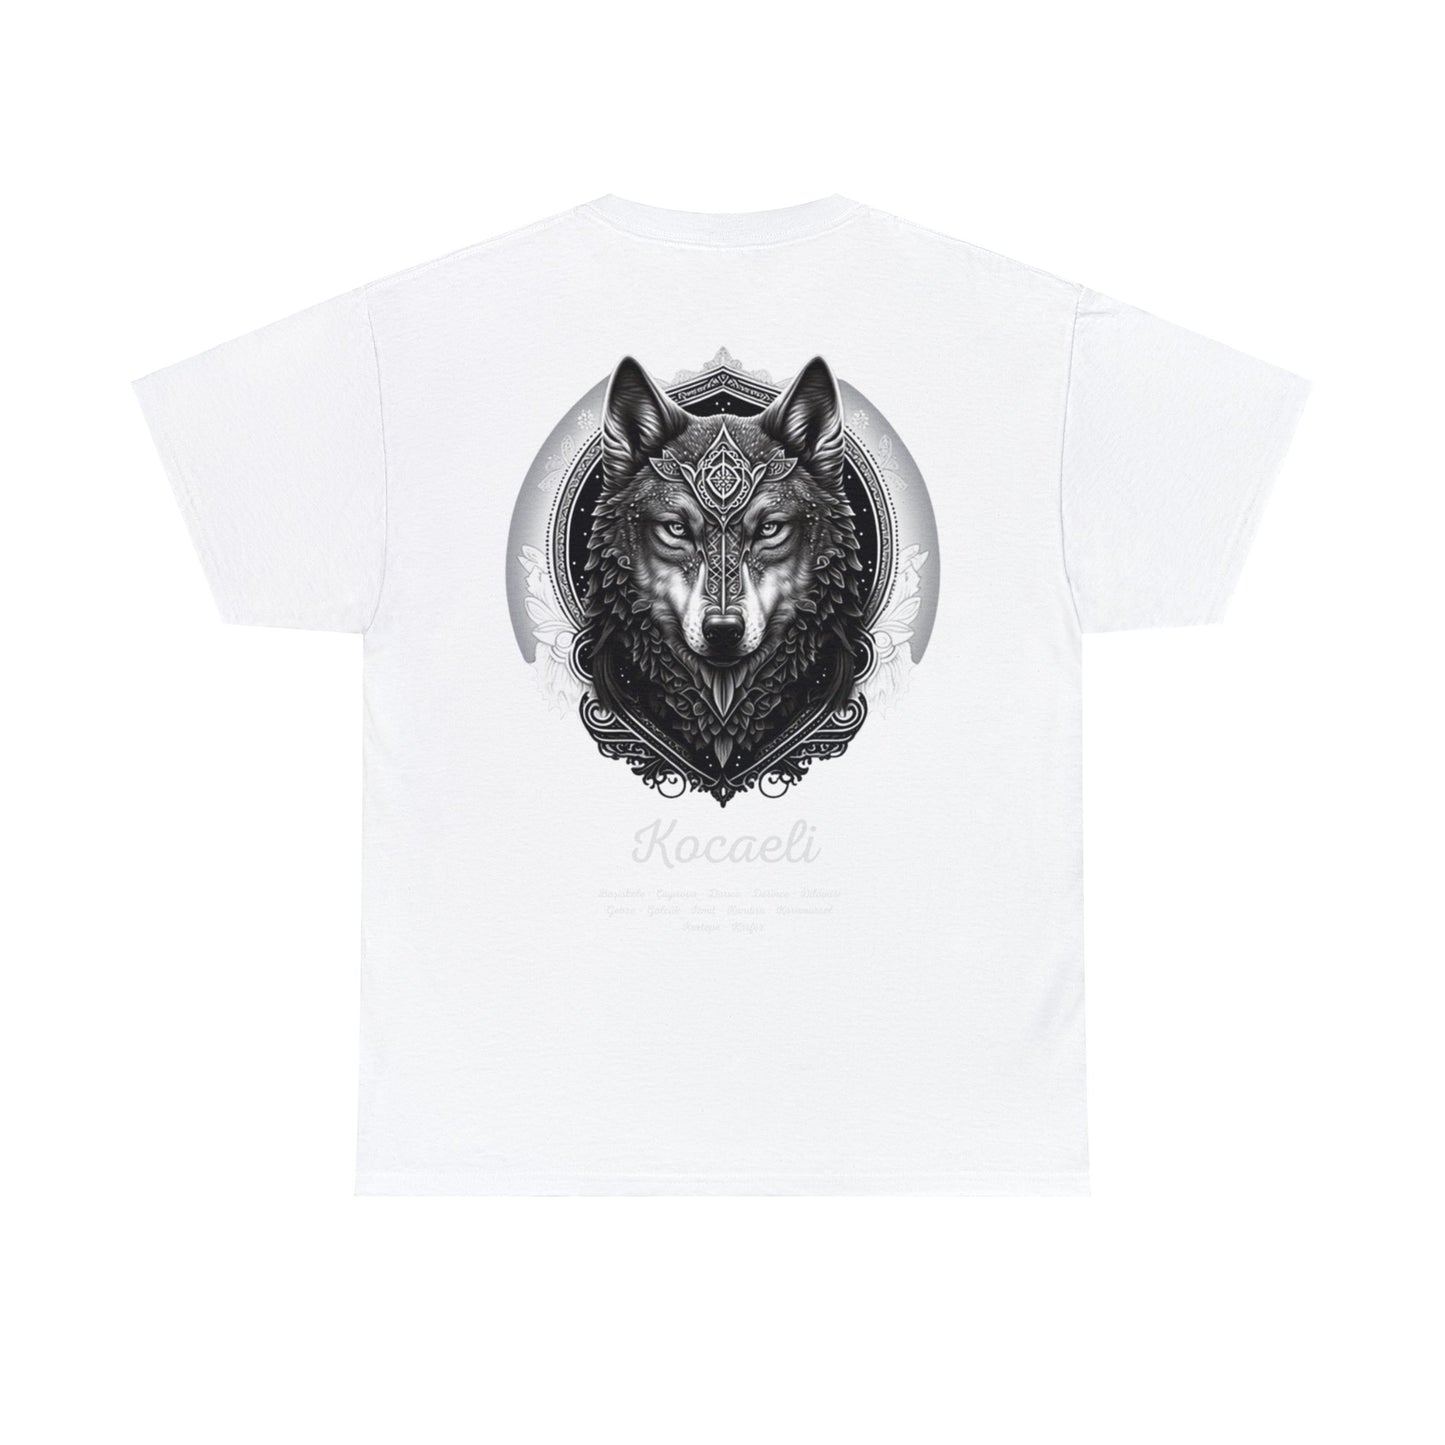 Kurt - 41 Kocaeli - T-Shirt - Back Print - Black/White